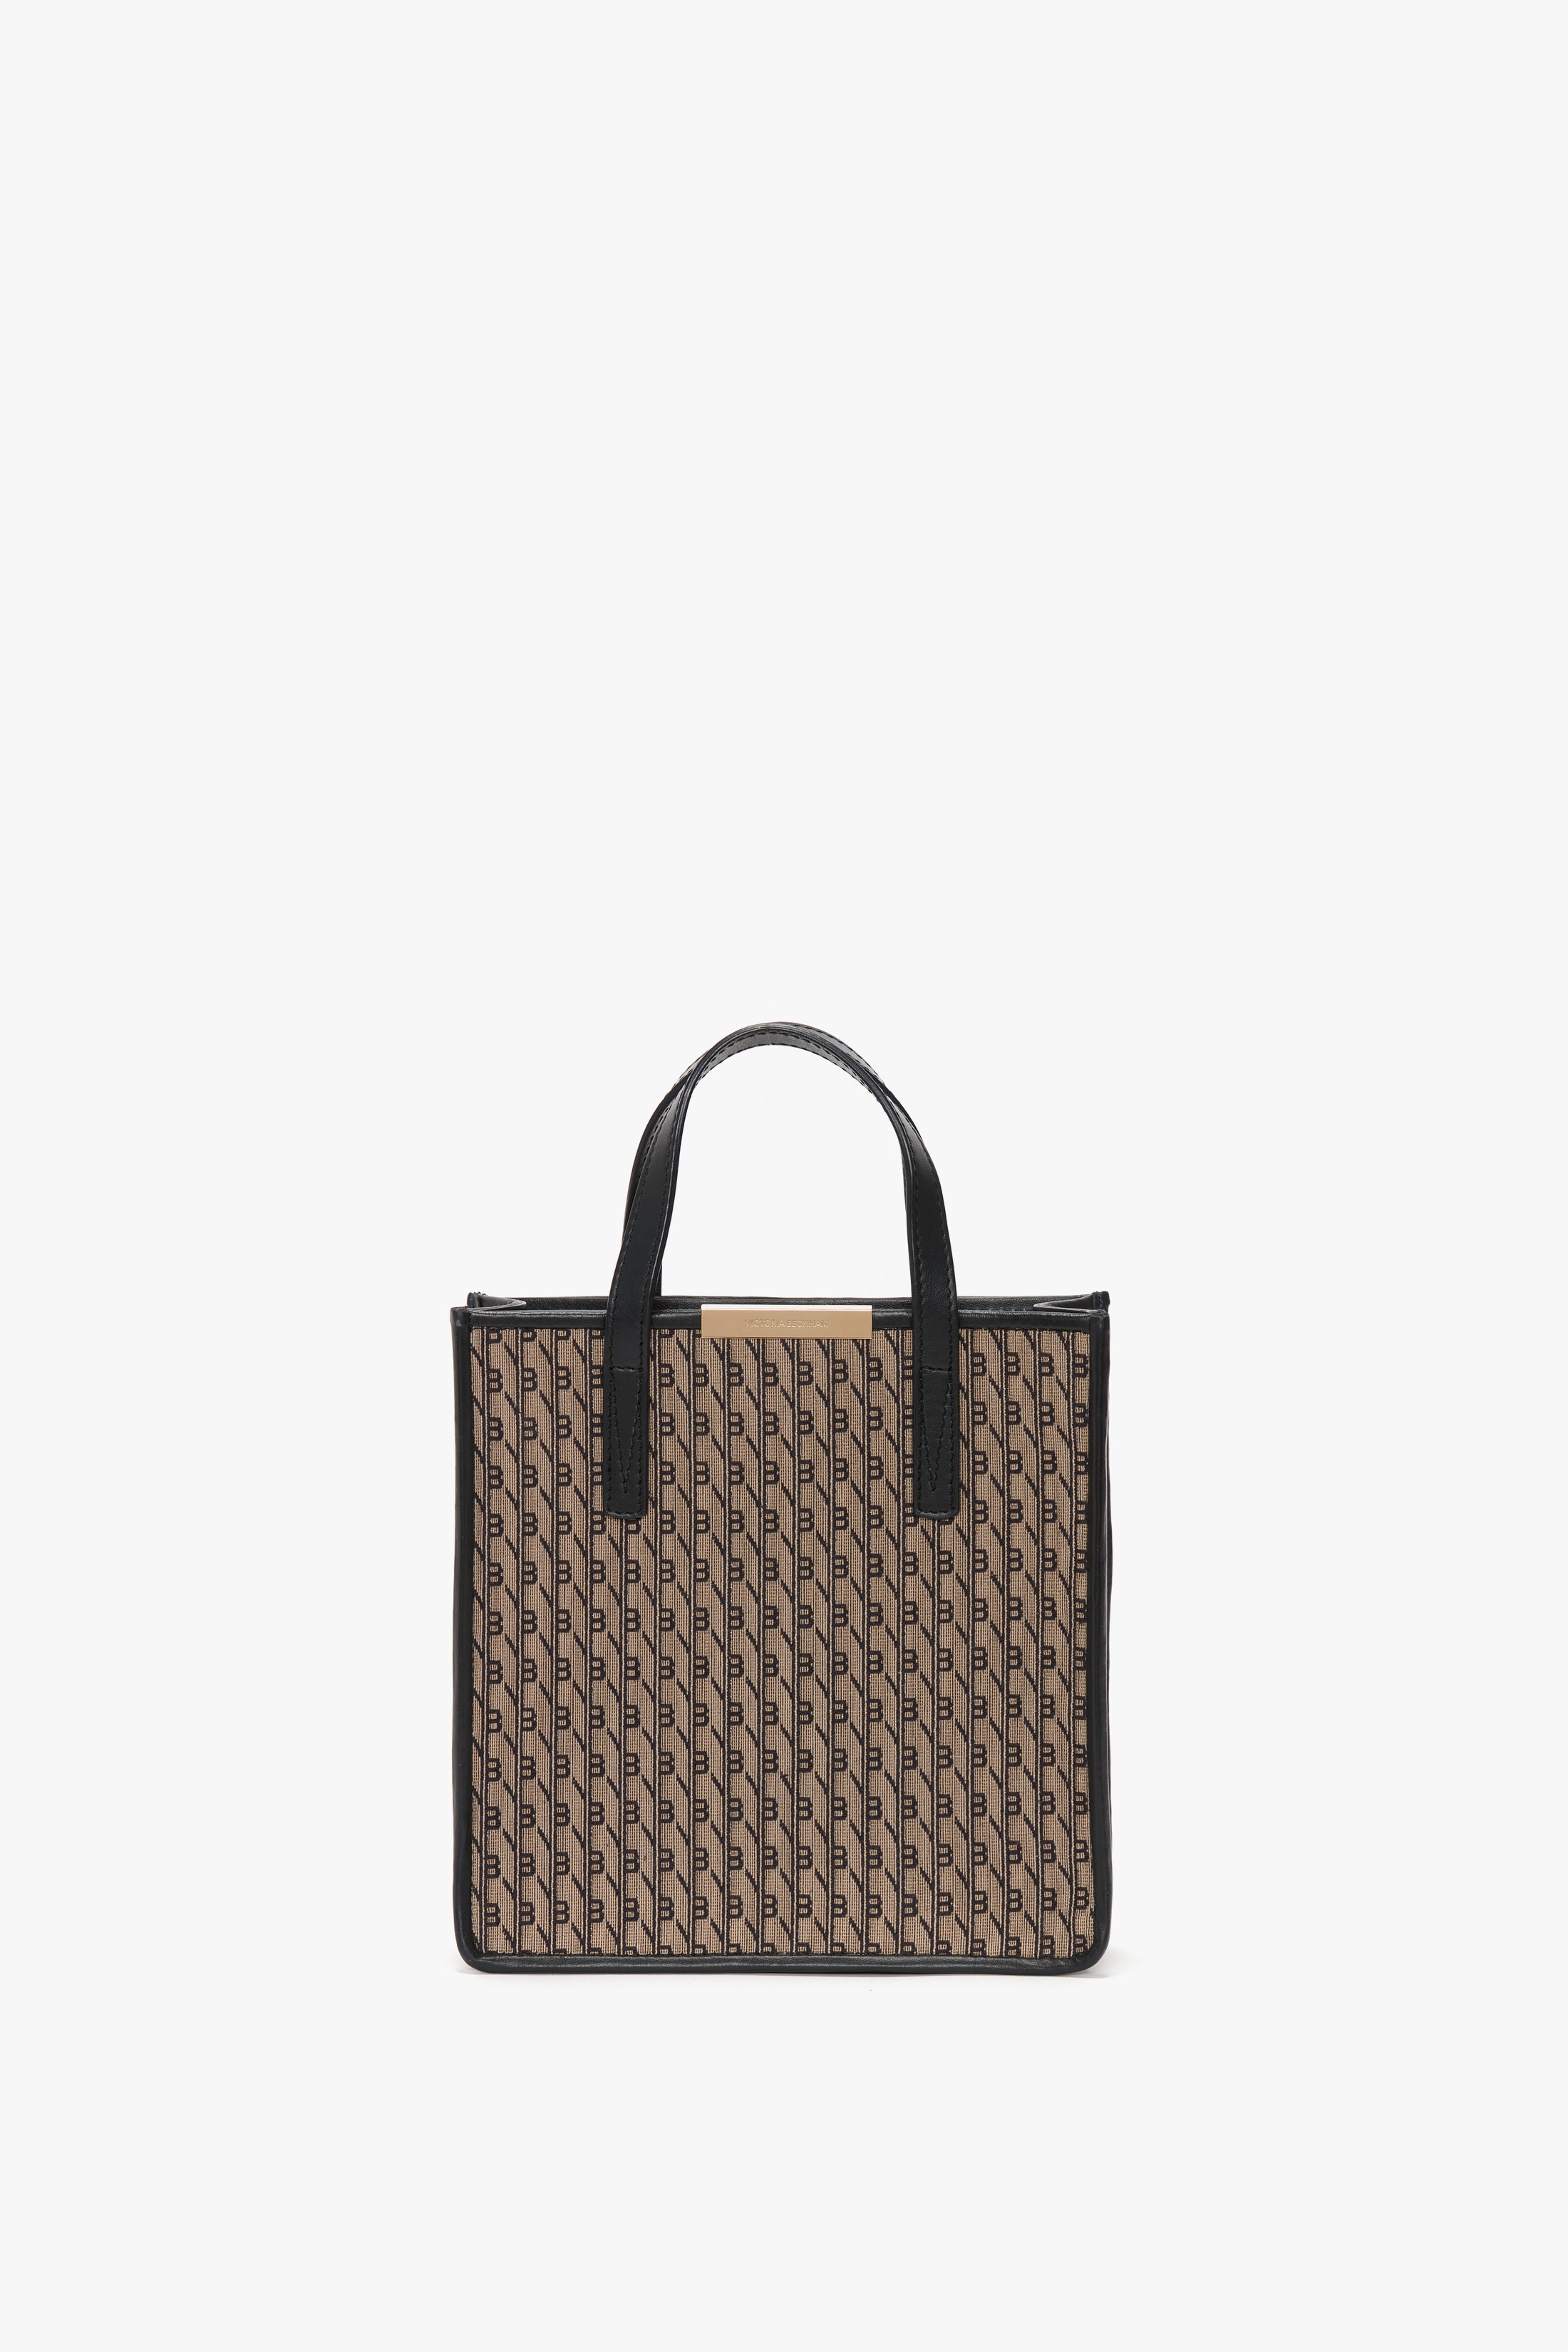 Fendi Logo 2-Way Smooth Ivory Leather Tote Bag